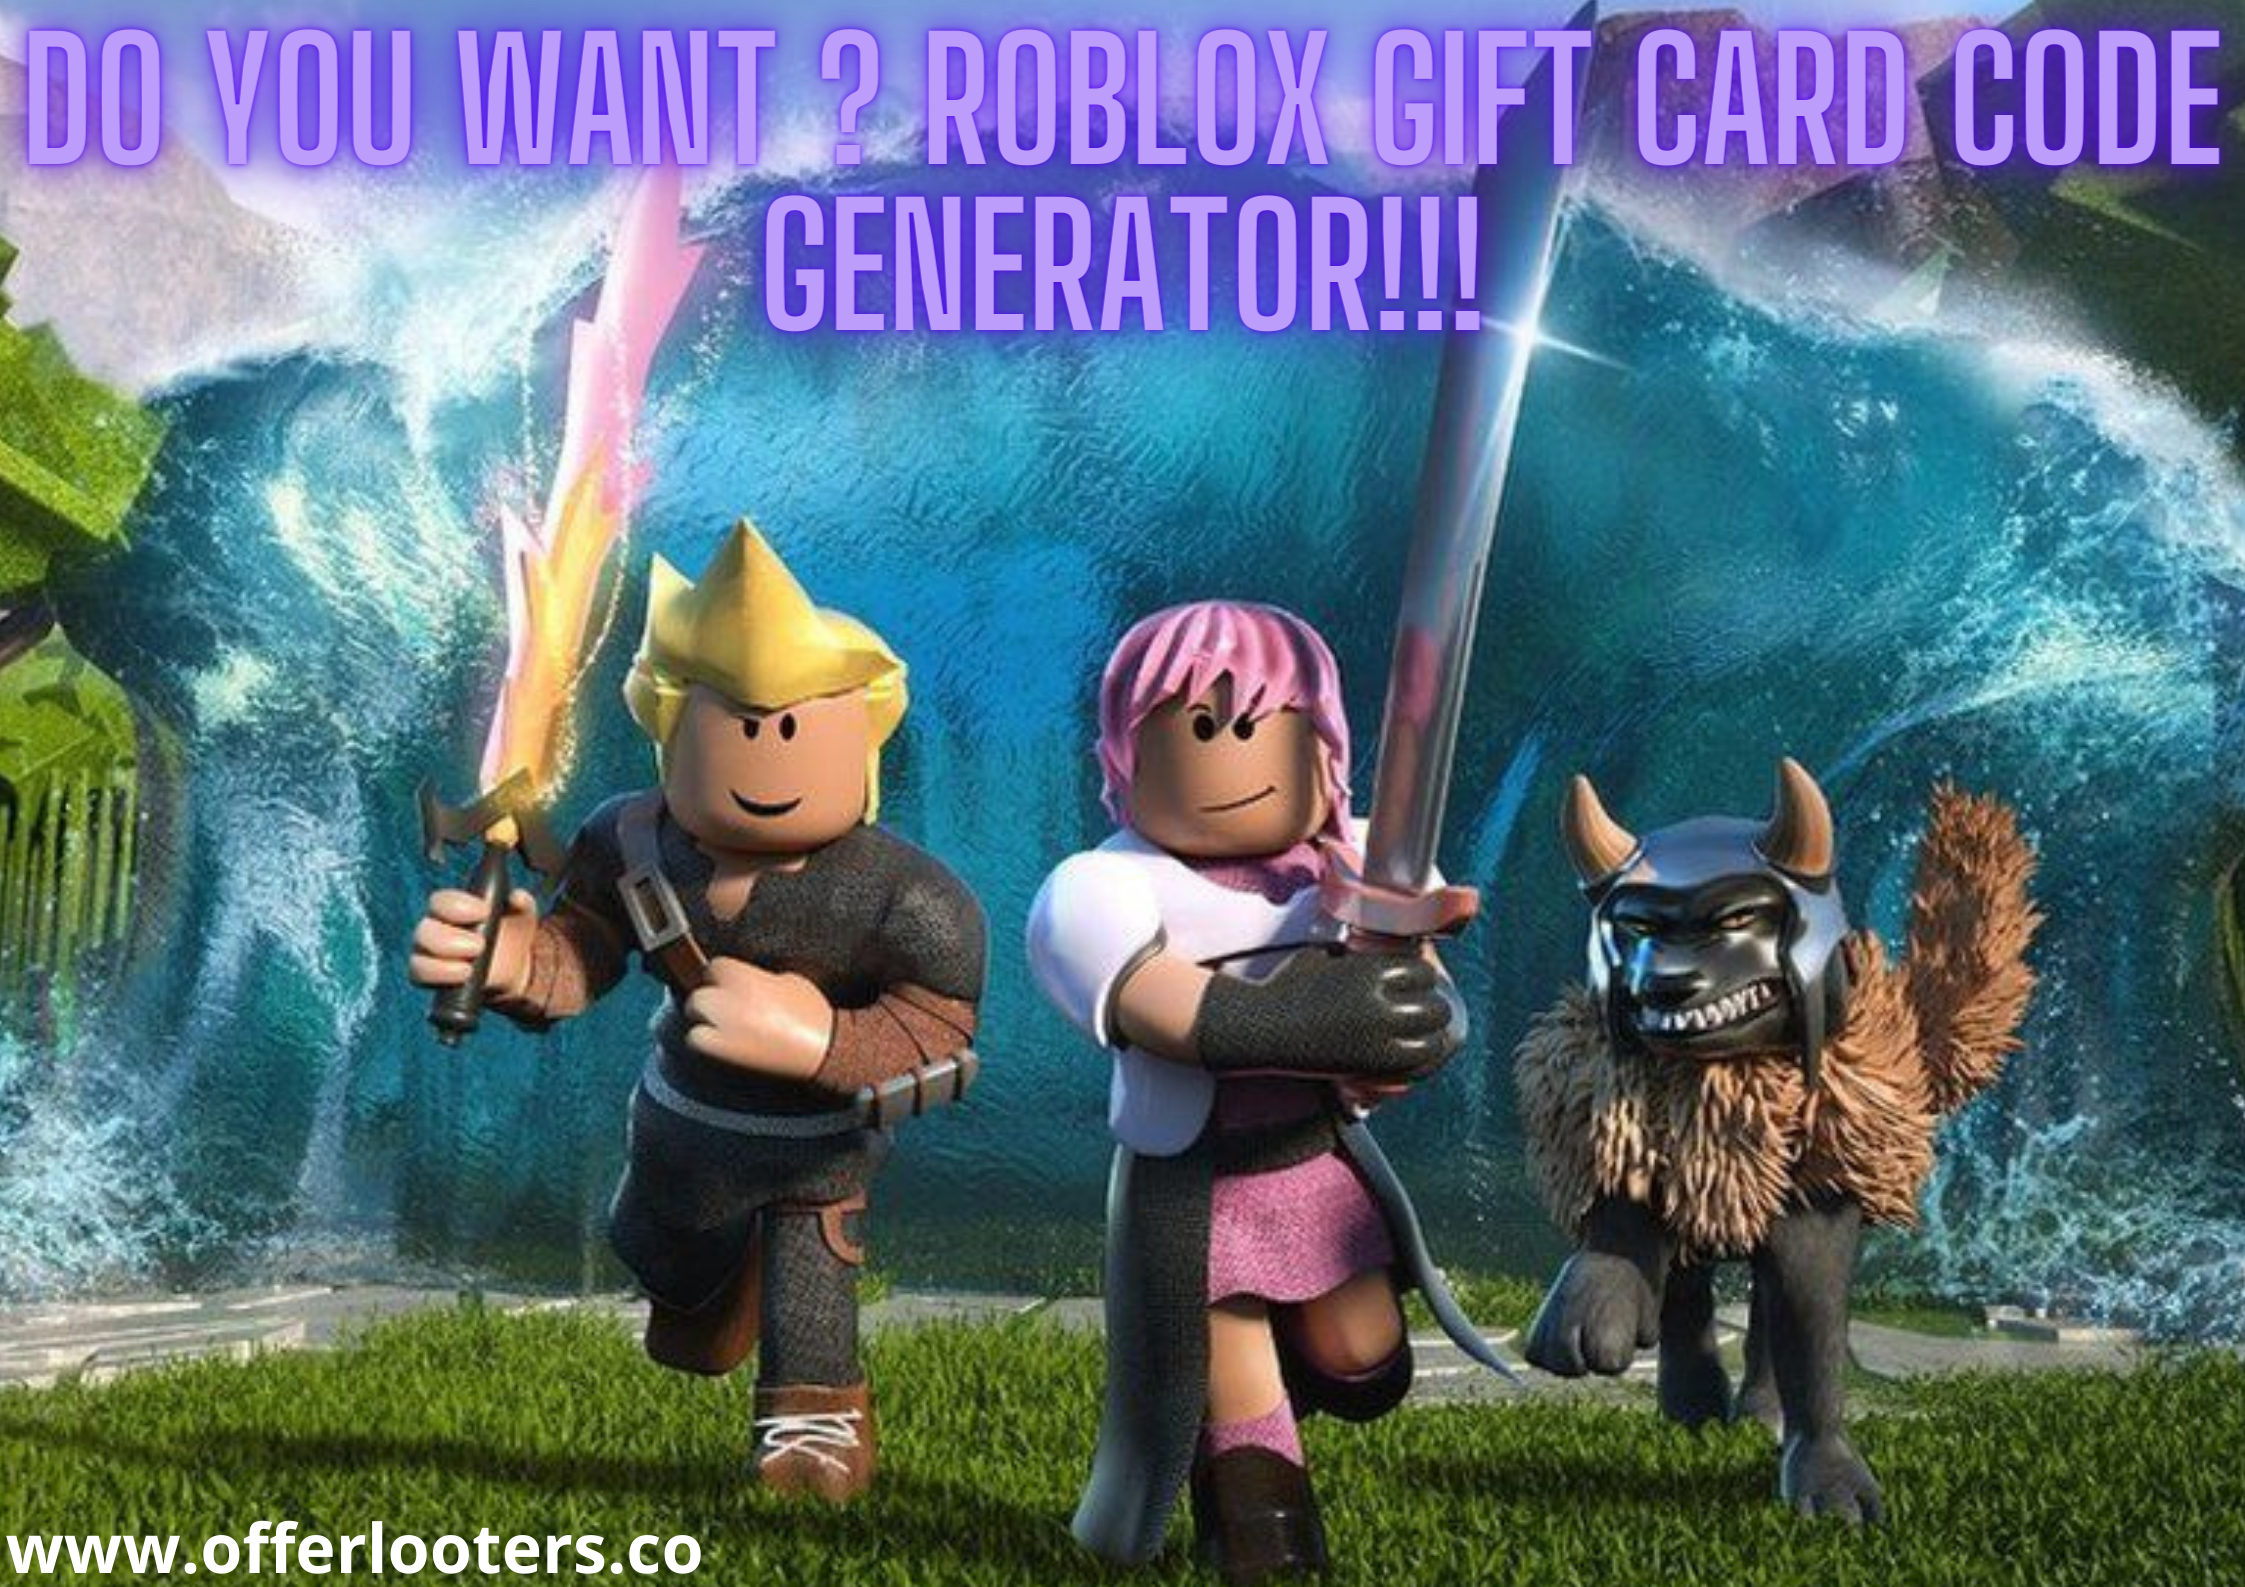 ROBLOX Gift Card Code Generator